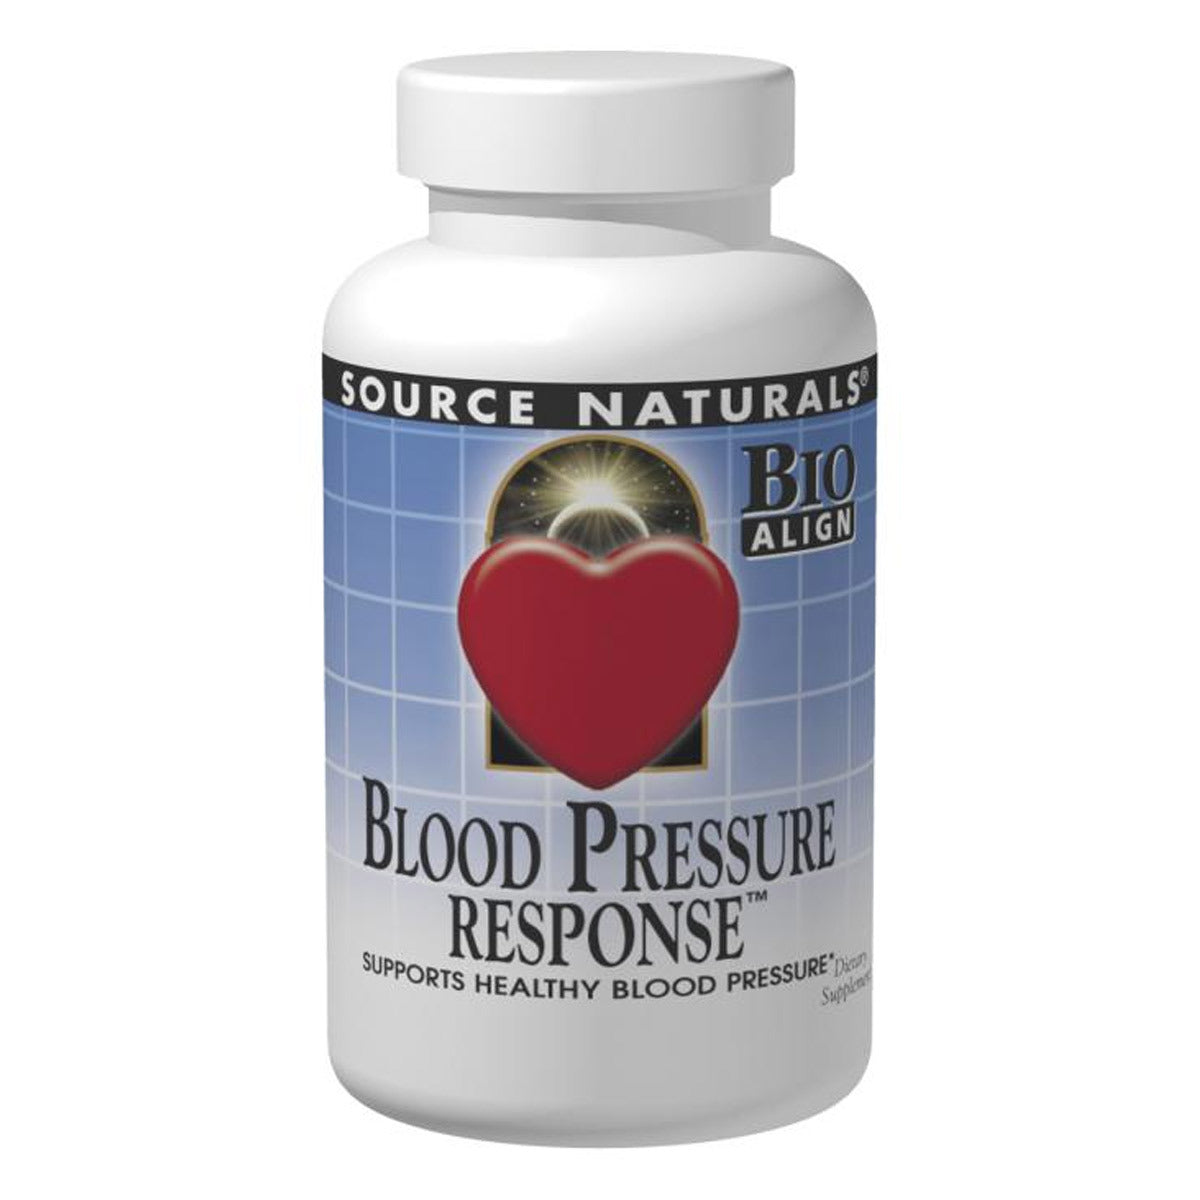 Primary image of Blood Pressure Response